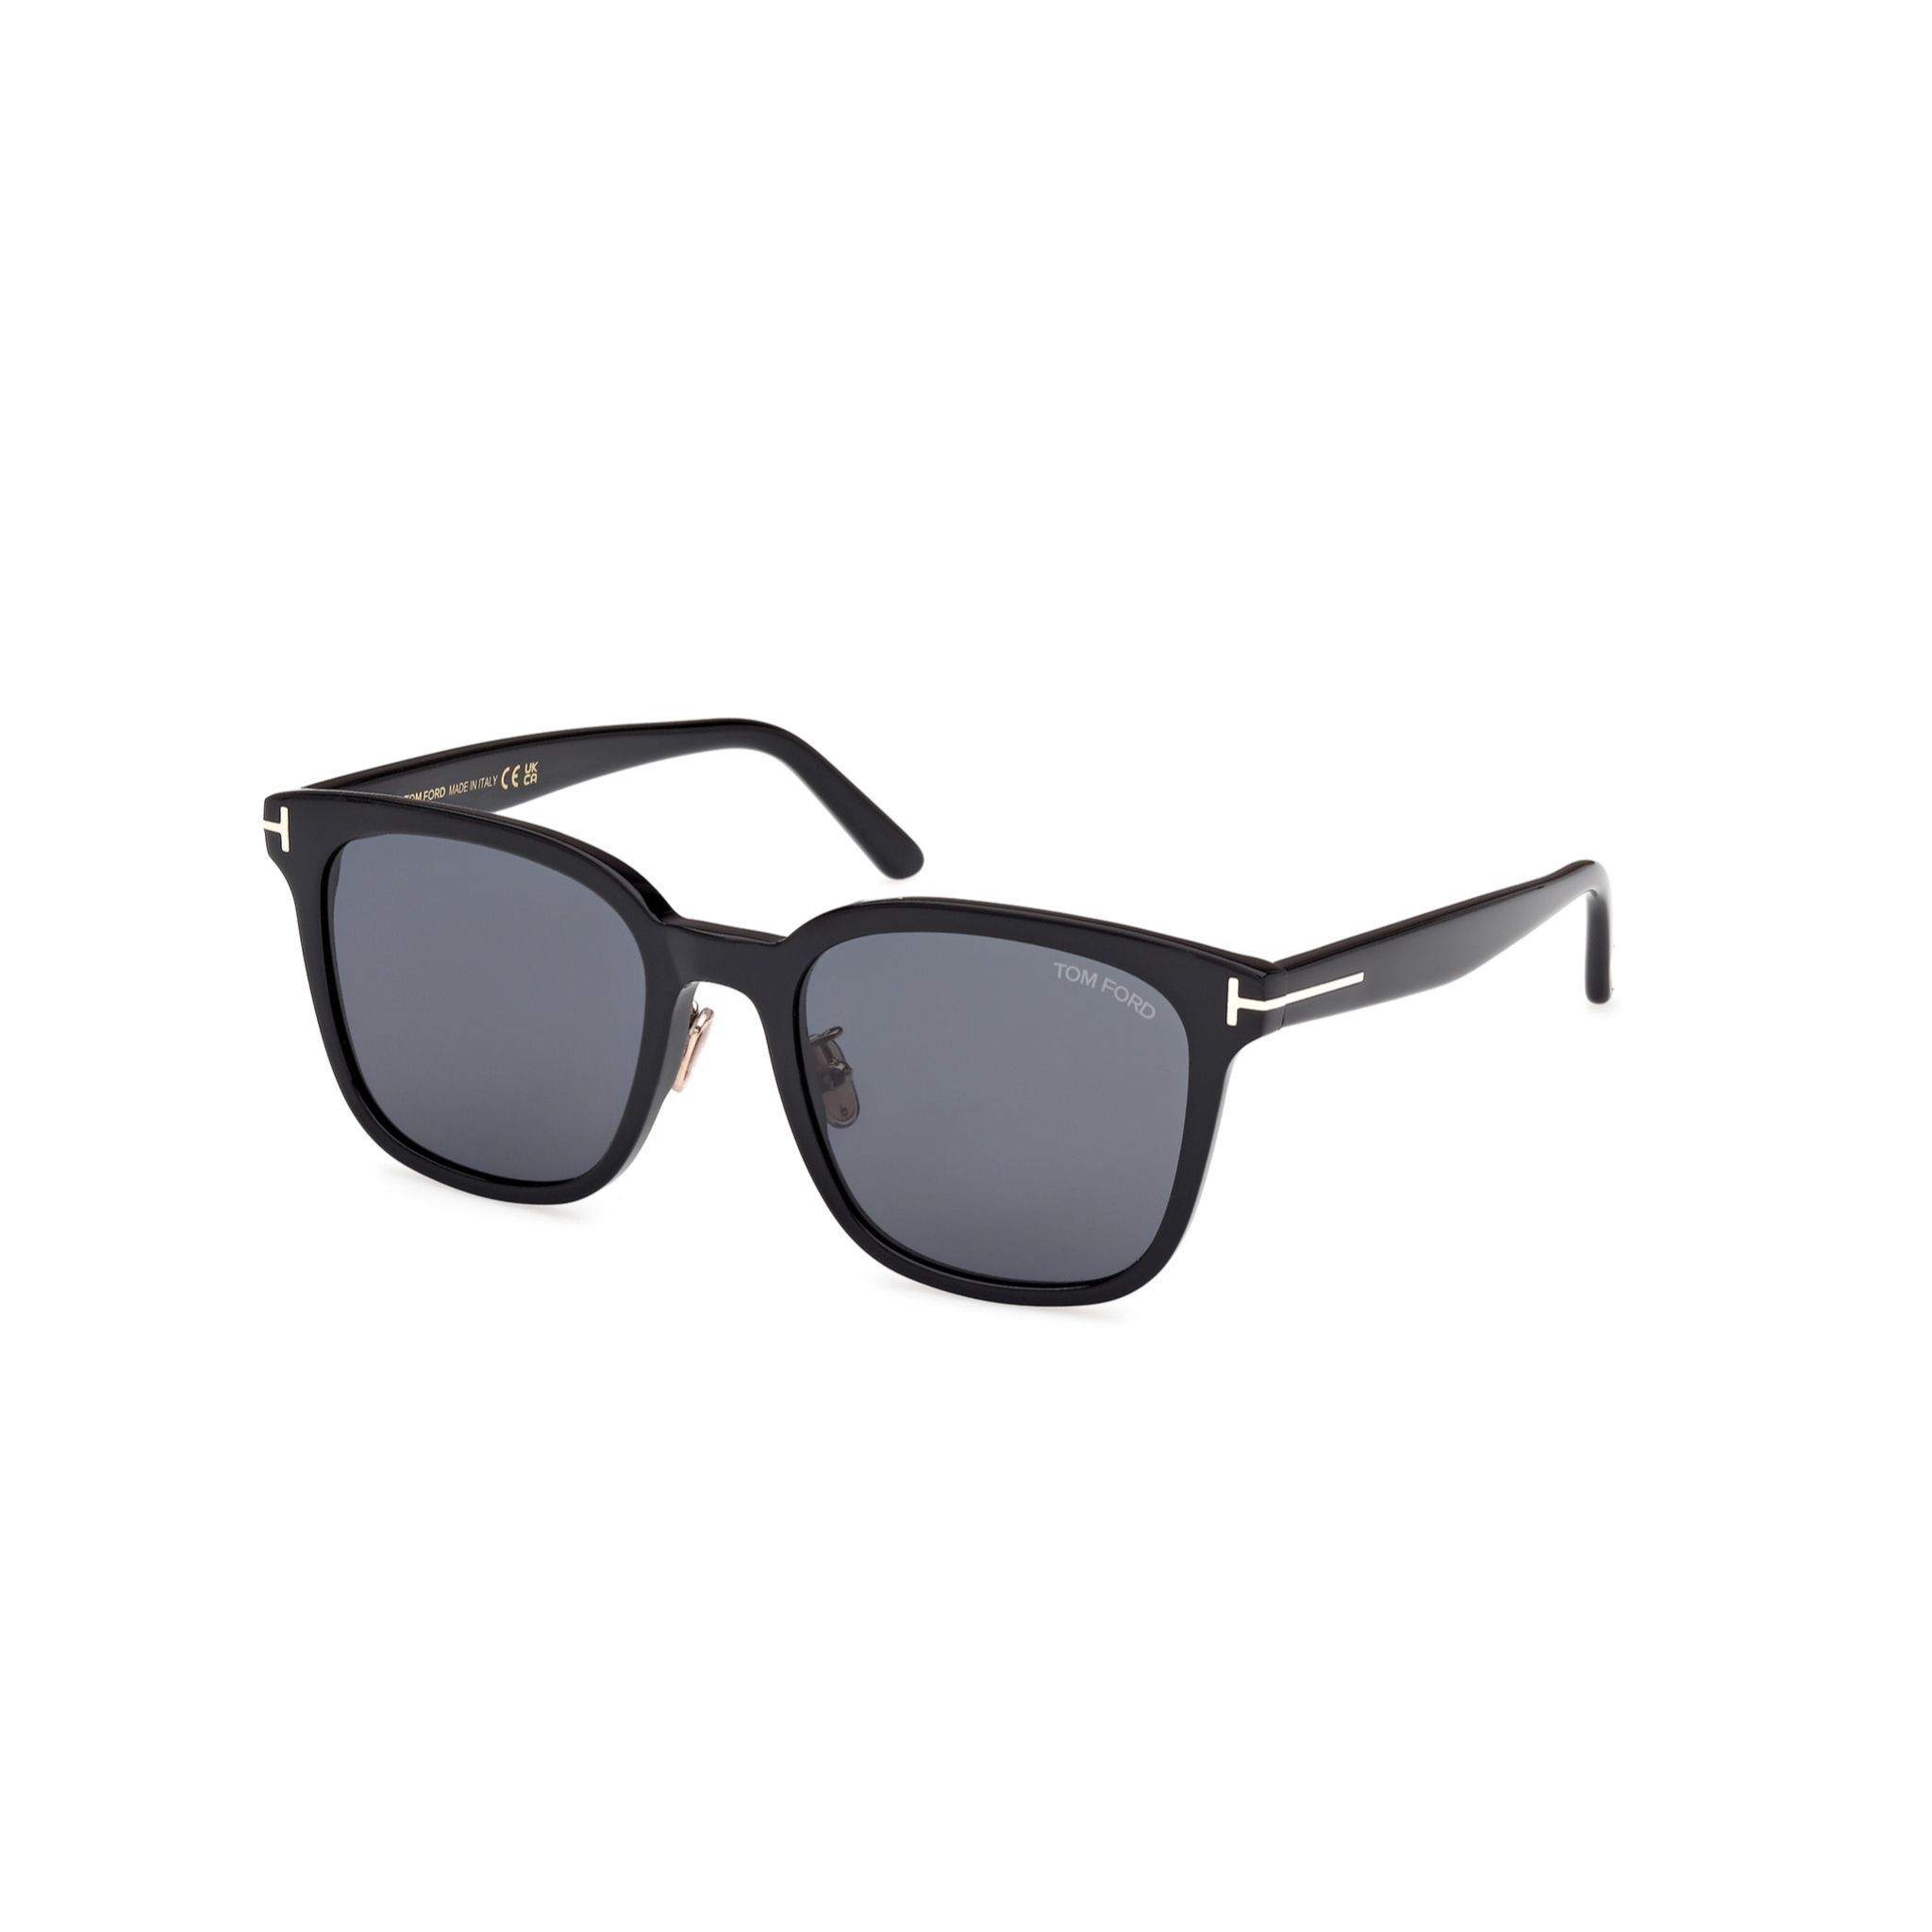 FT1135 Square Sunglasses 01A - size 54